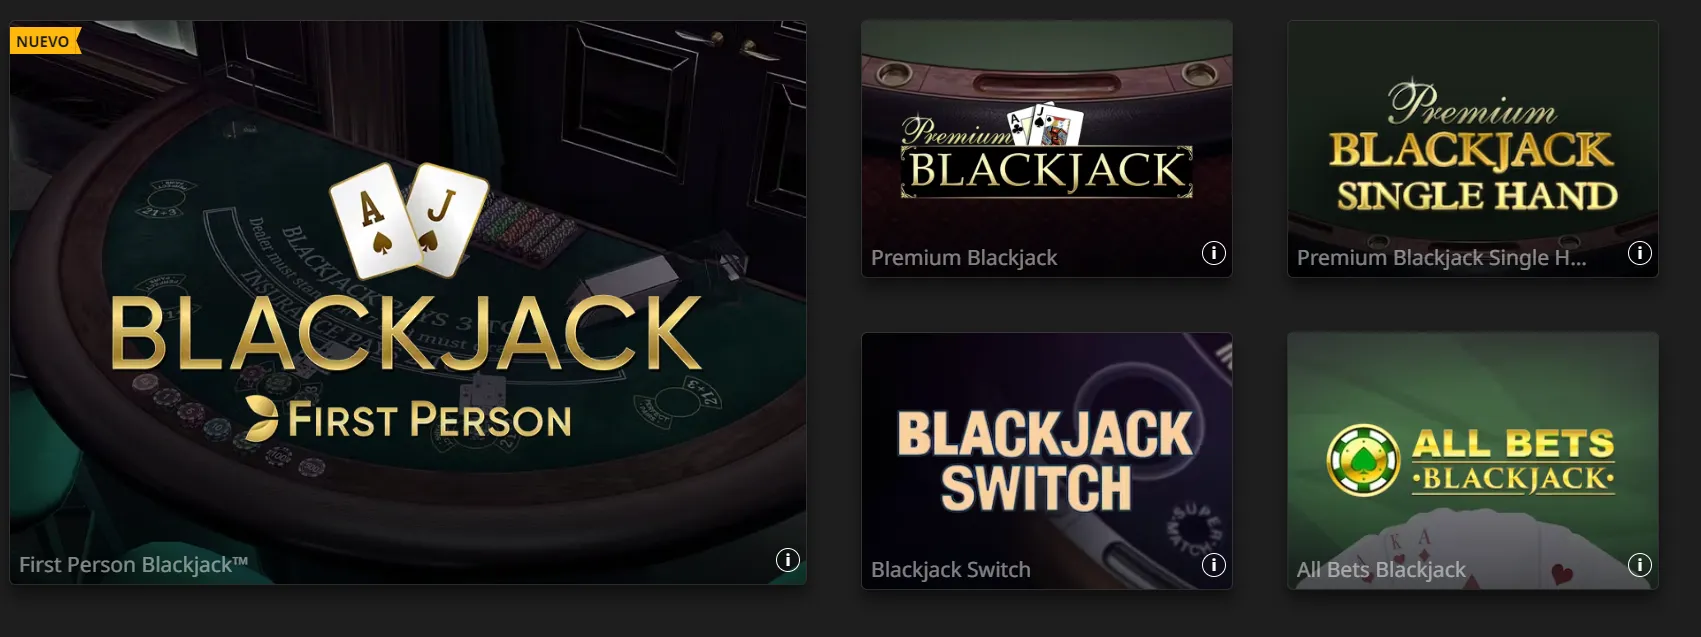 casino blackjack betfair colombia